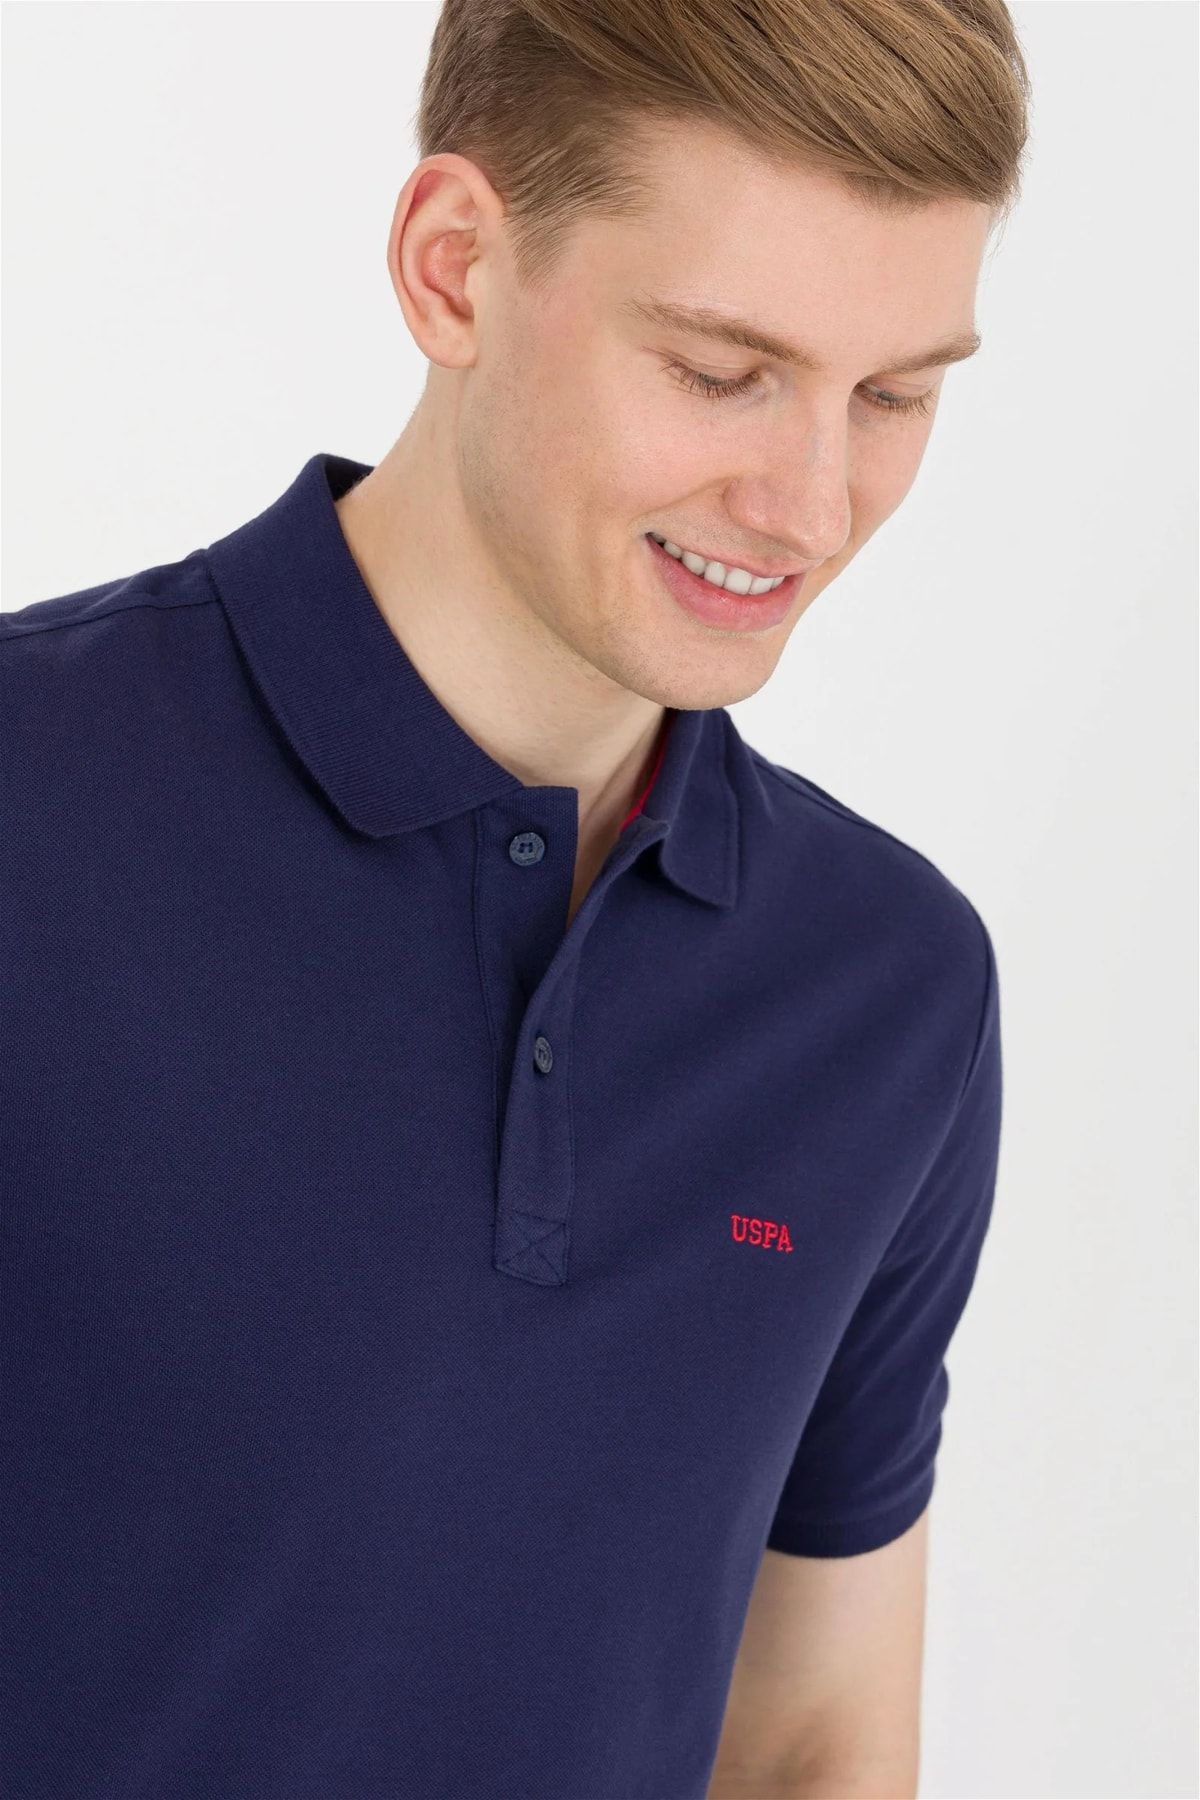 U.S. Polo Assn. تی شرت پایه یقه پولو آبی سرمه ای مردانه